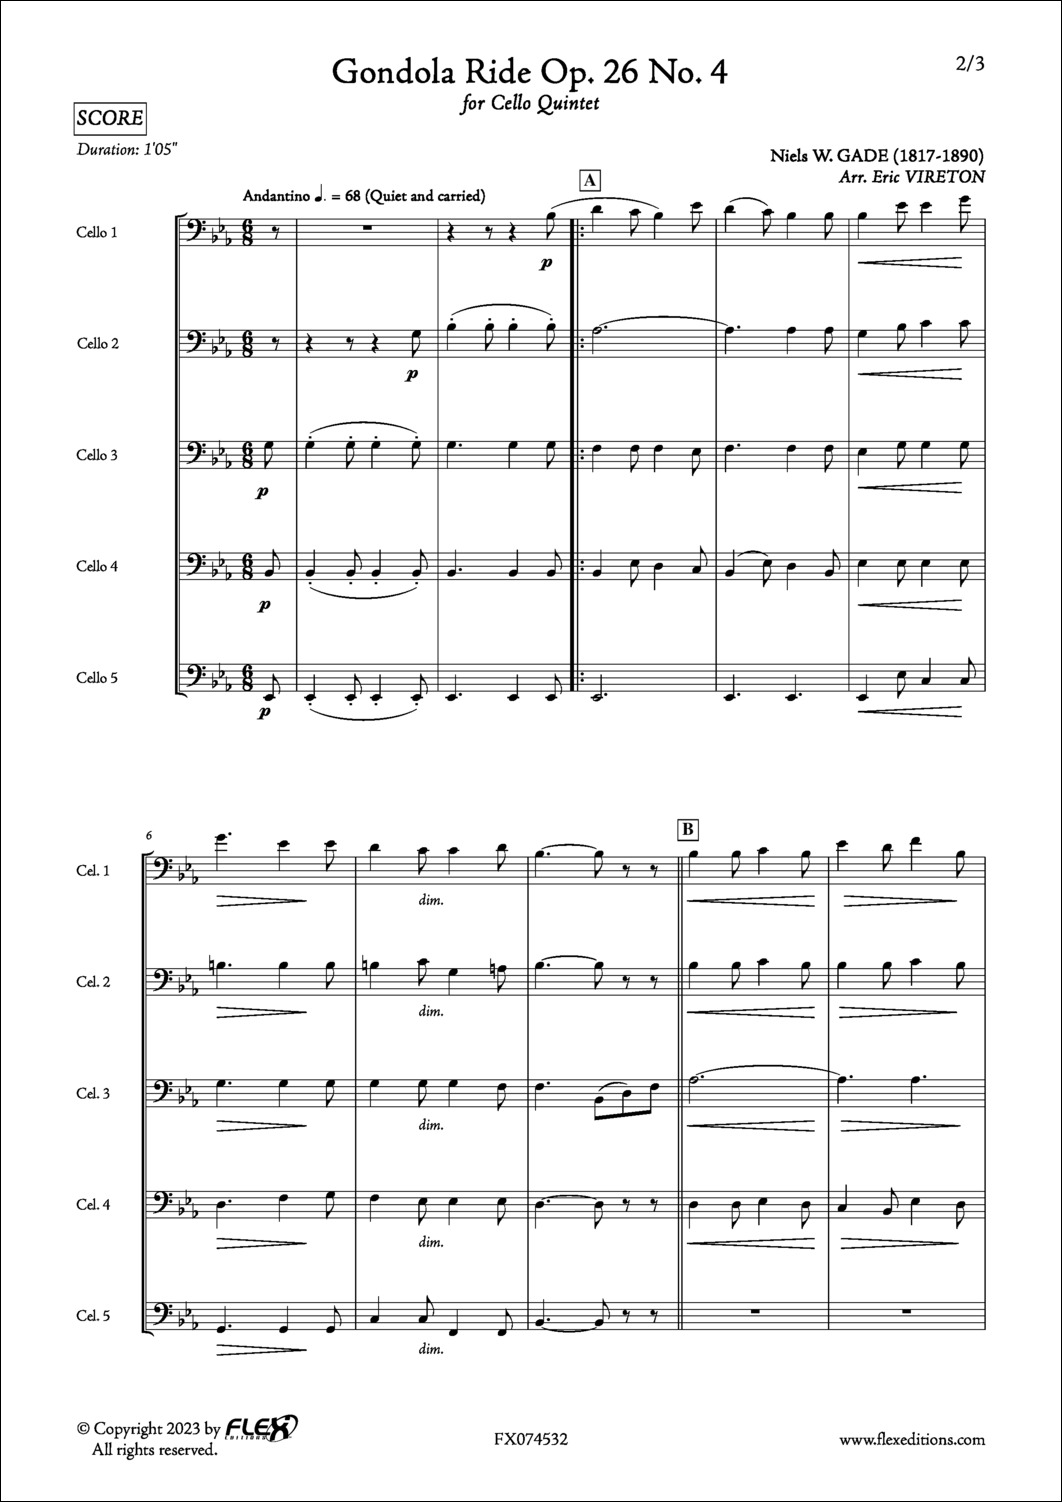 Promenade en Gondole Op. 26 No. 4 - N. GADE - <font color=#666666>Quintette de Violoncelles</font>